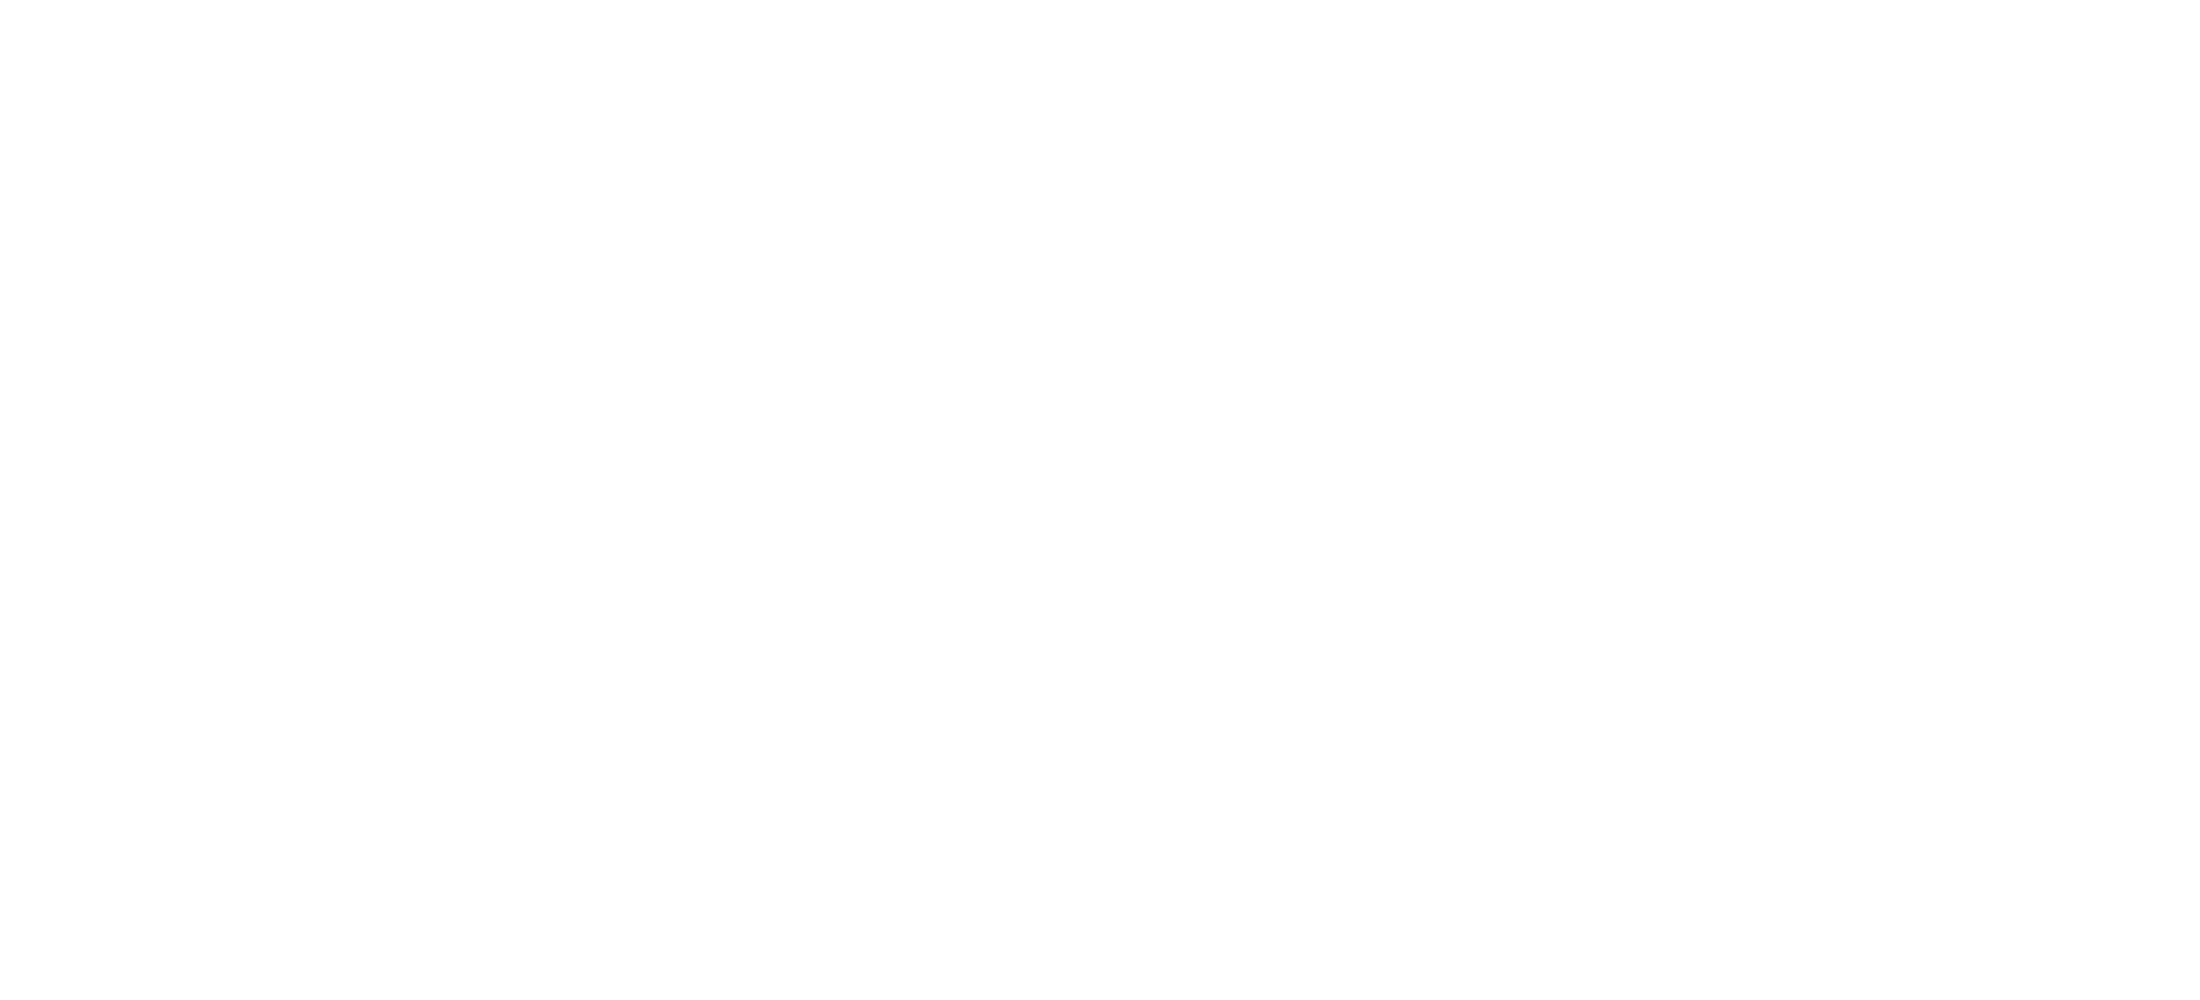 IAB MIXX AWARDS 2021 CASEBOOK